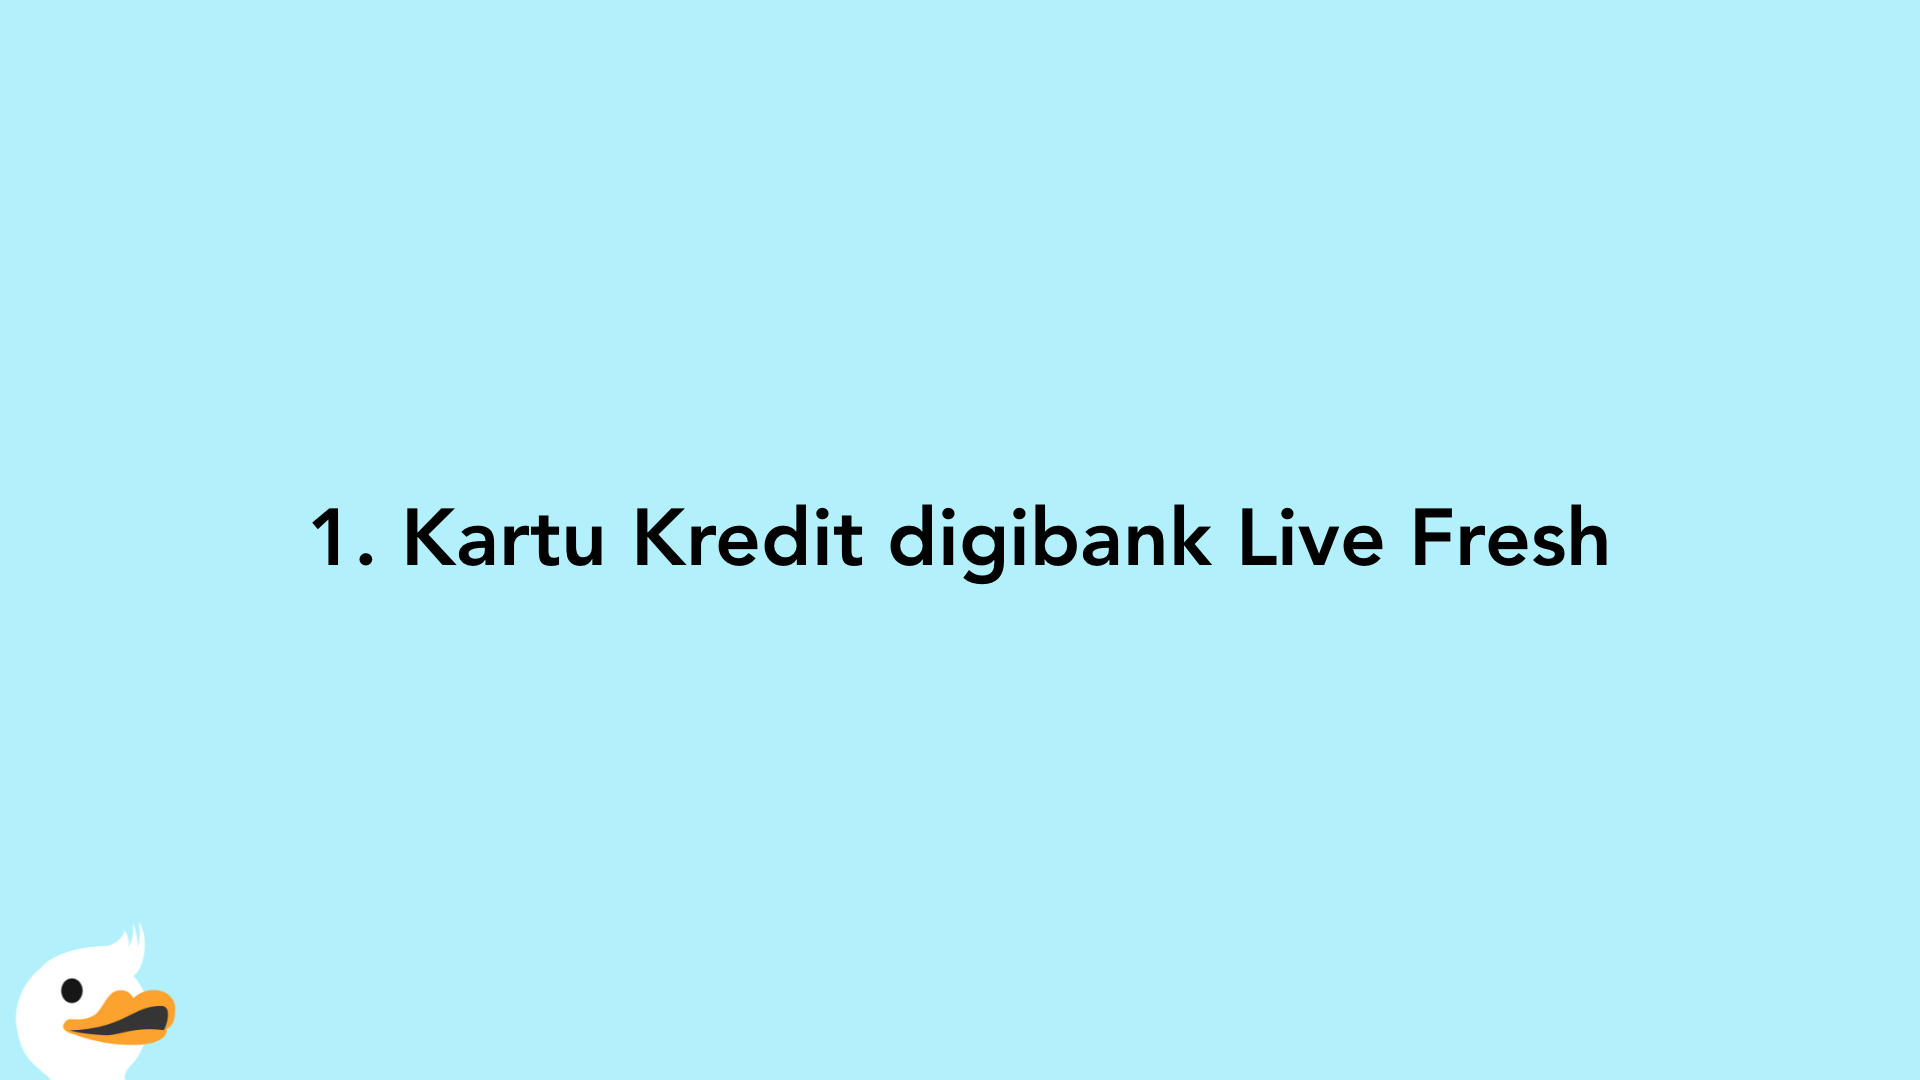 1. Kartu Kredit digibank Live Fresh